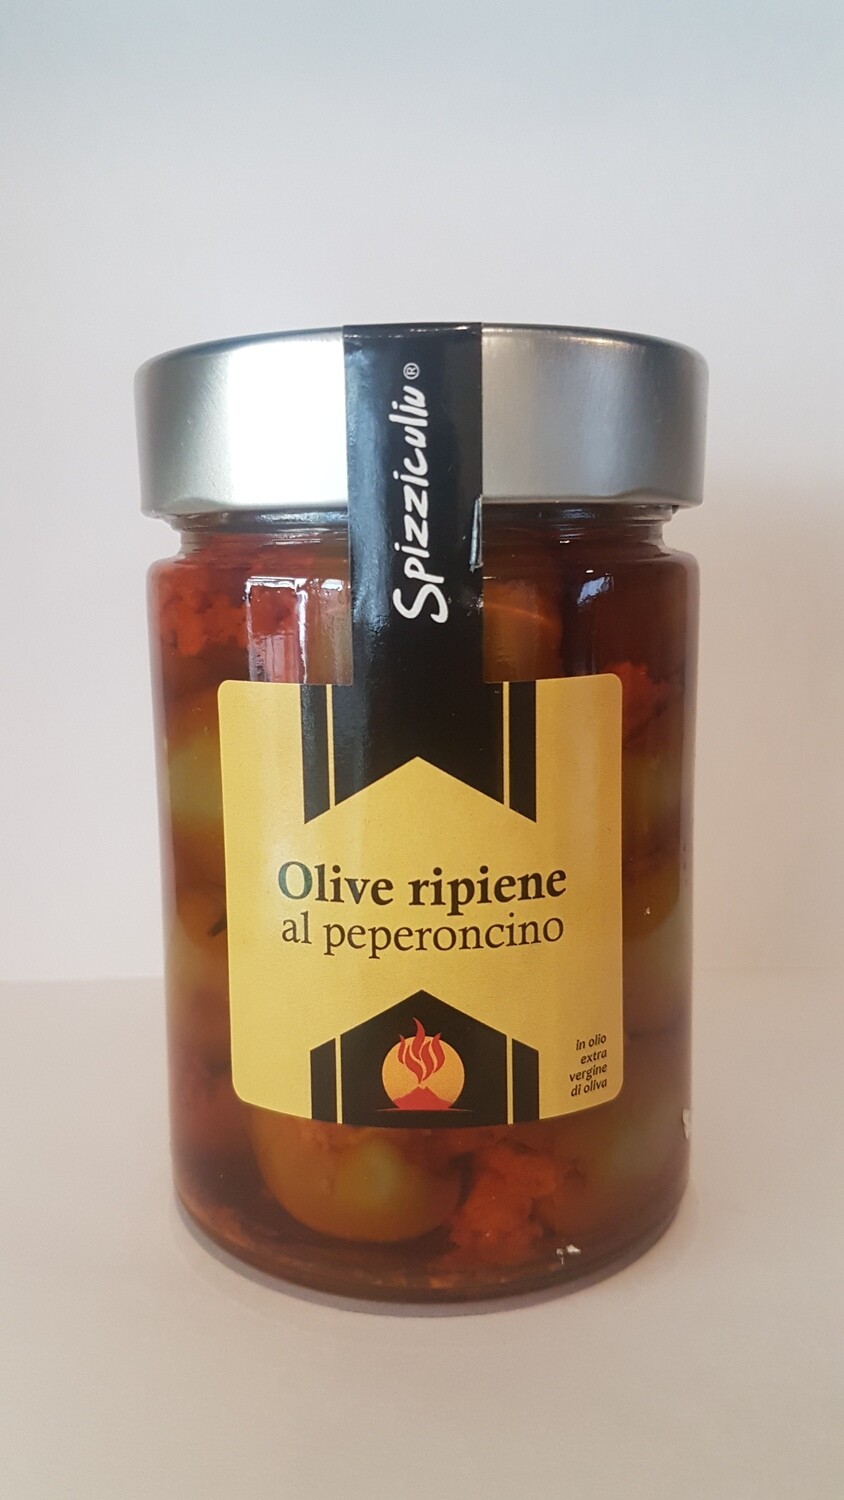 Olive ripiene al peperoncino